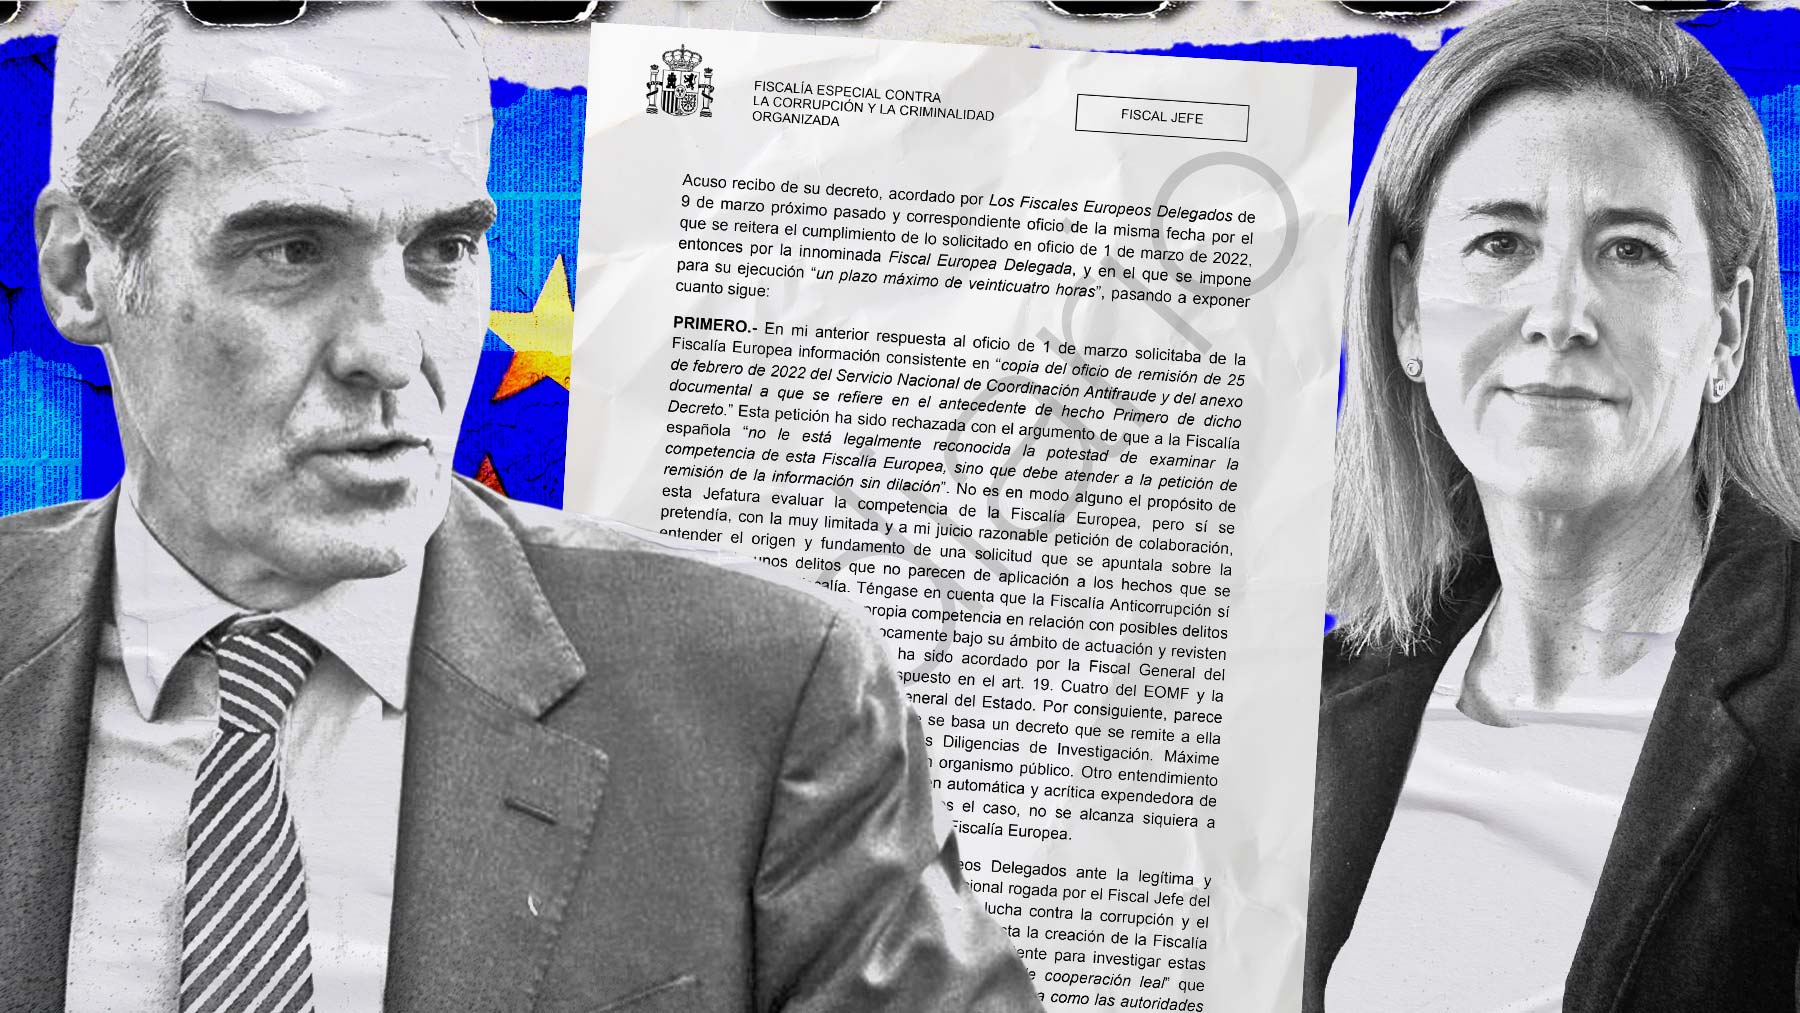 Fiscal de Anticorrupción Alejandro Luzón y la fiscal española en la Fiscalía Europea Concha Sabadell